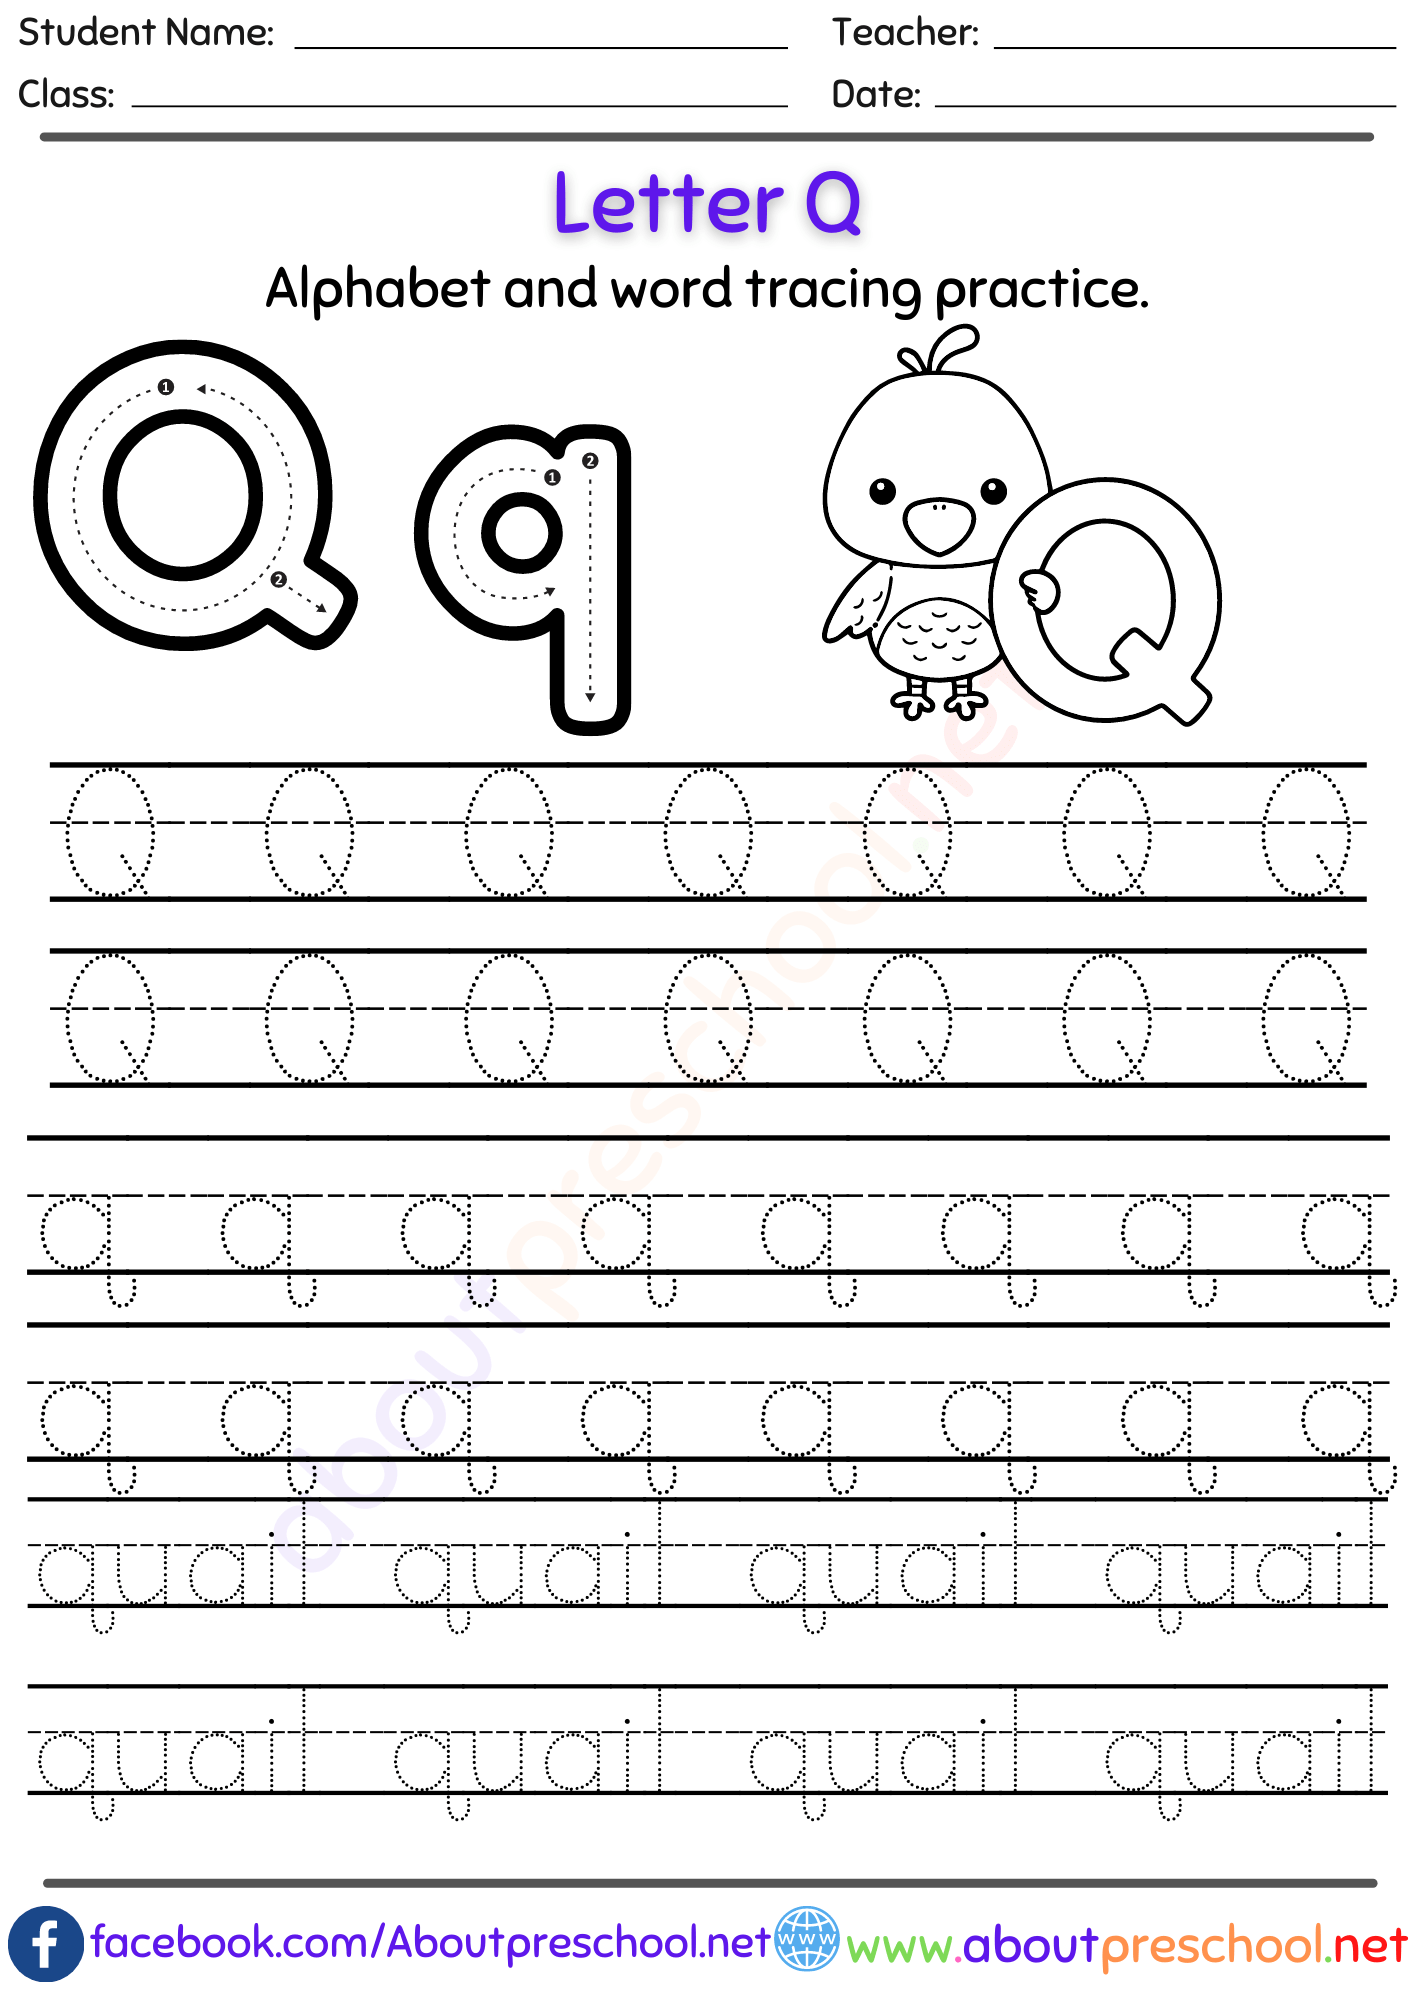 Letter Q Alphabet tracing worksheets